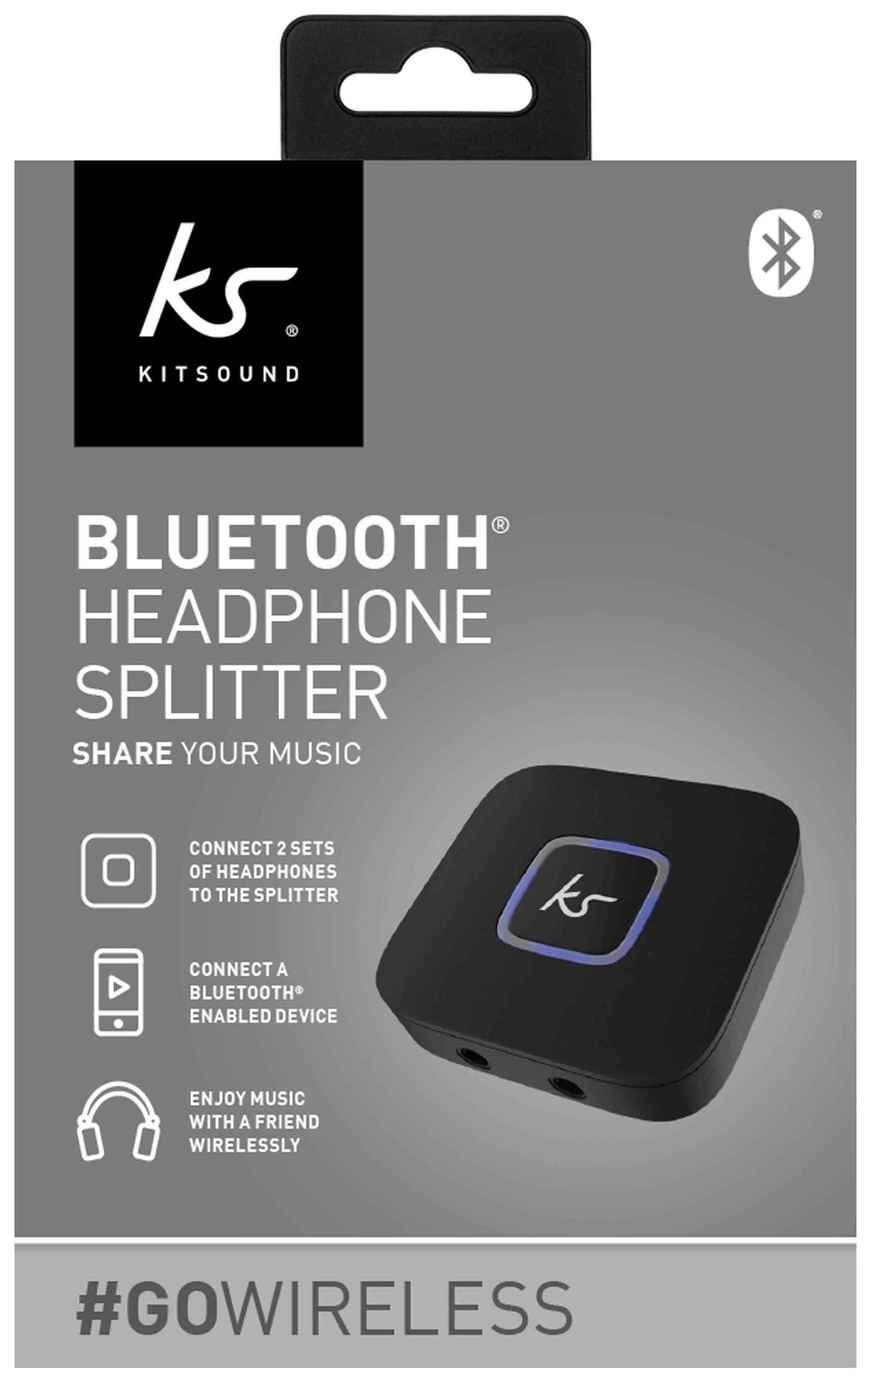 KitSound Bluetooh Headphone Splitter